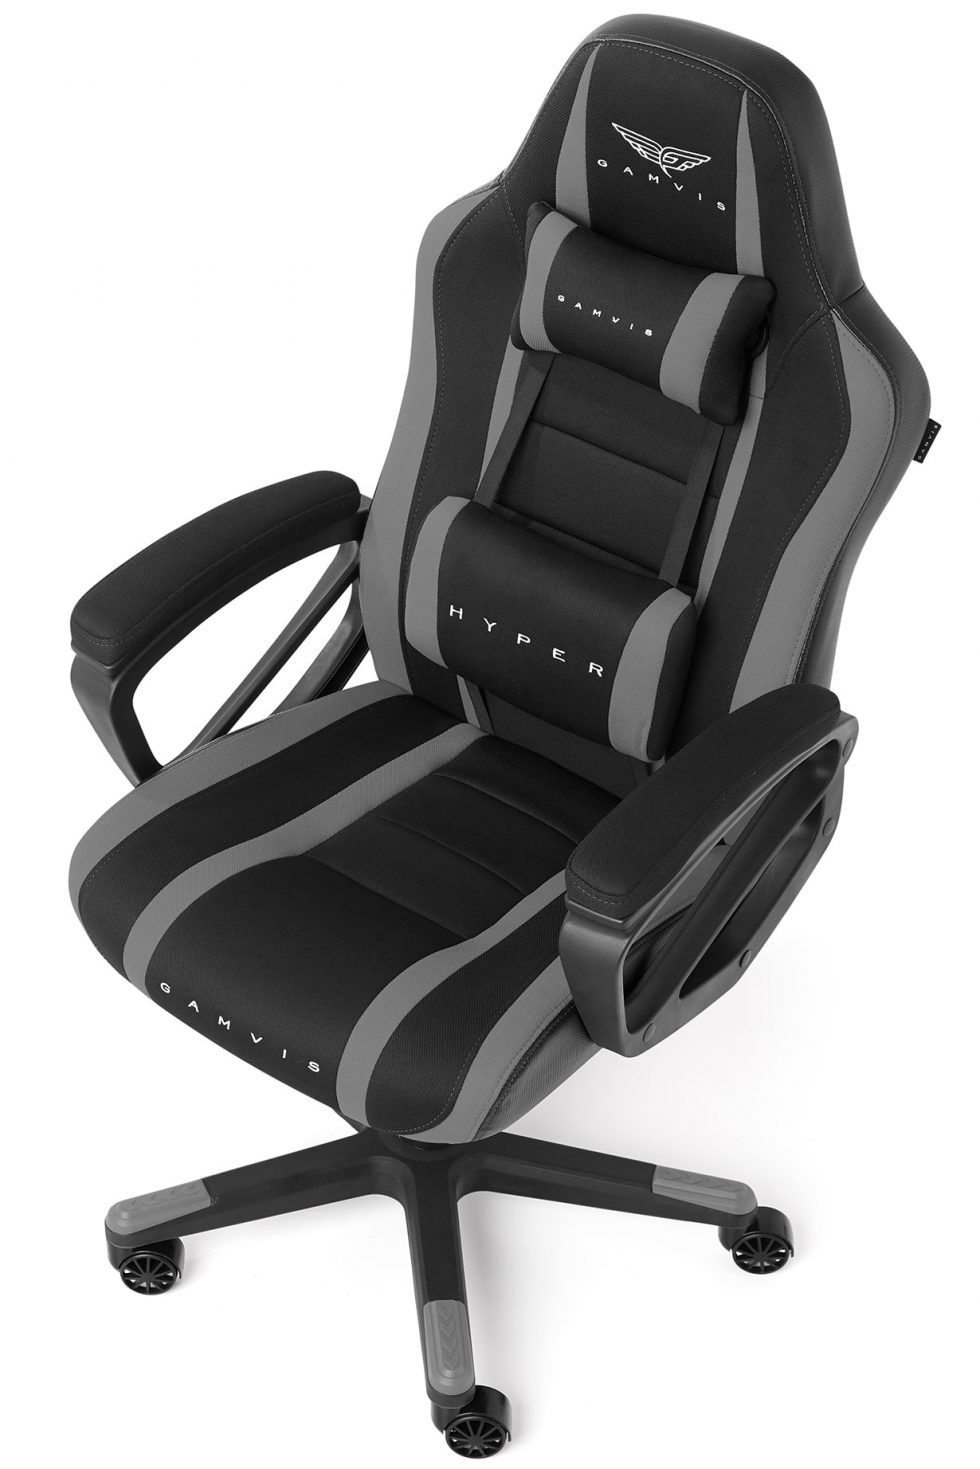 Gamvis Hyper Gaming Chair Fabric Black Gray